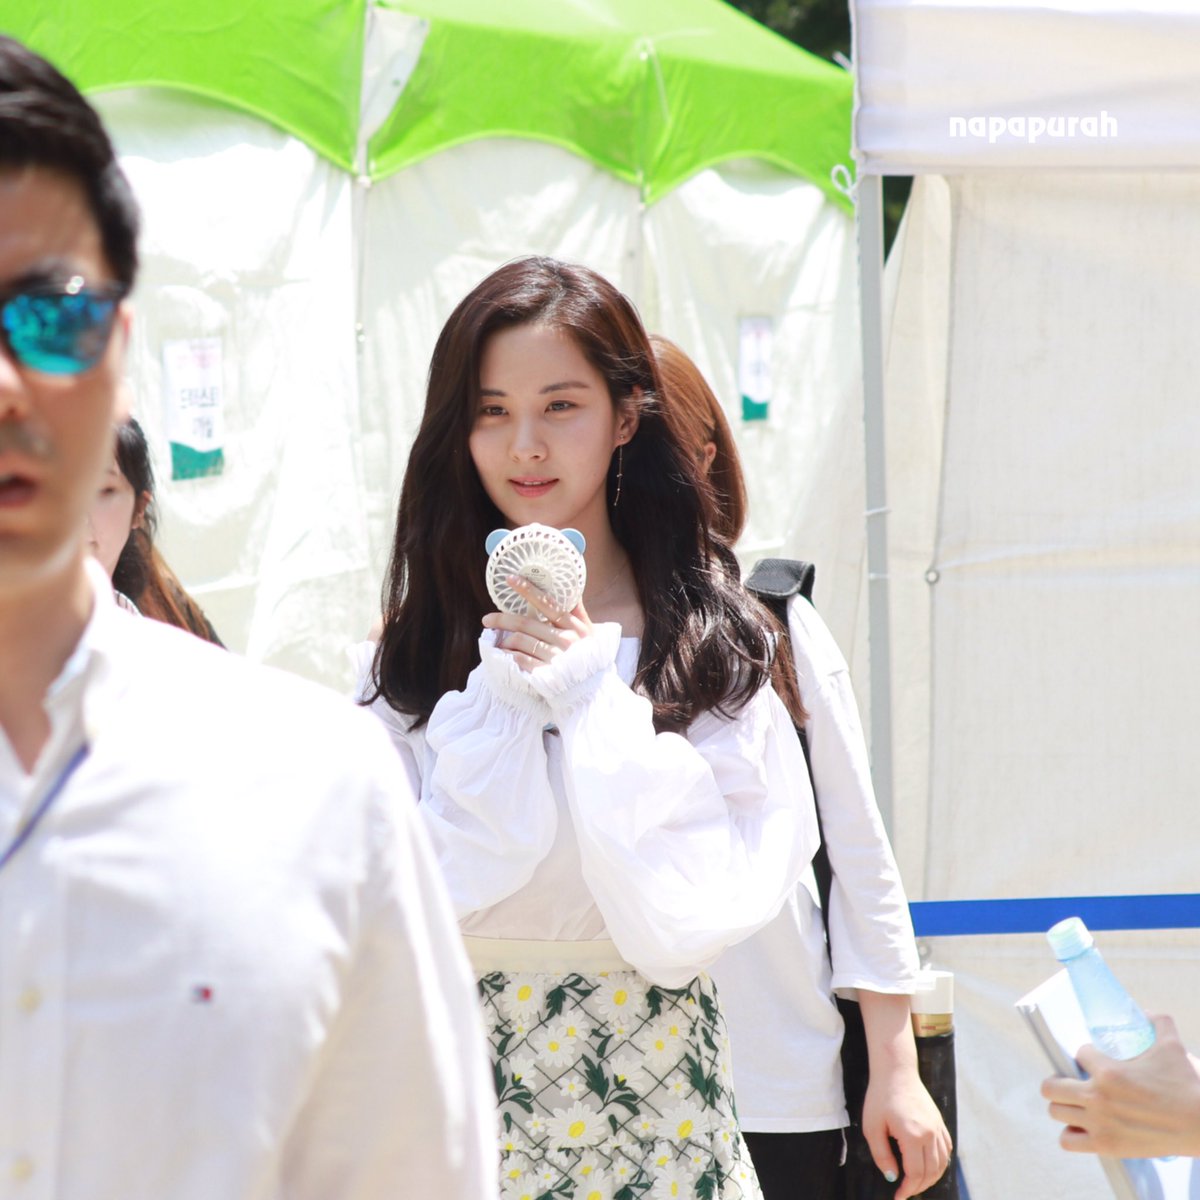  [PIC][03-06-2017]SeoHyun tham dự sự kiện “City Forestival - Maeil Duyou 'Confidence Diary'” vào chiều nay - Page 3 DBpEXsbUMAAkWTw